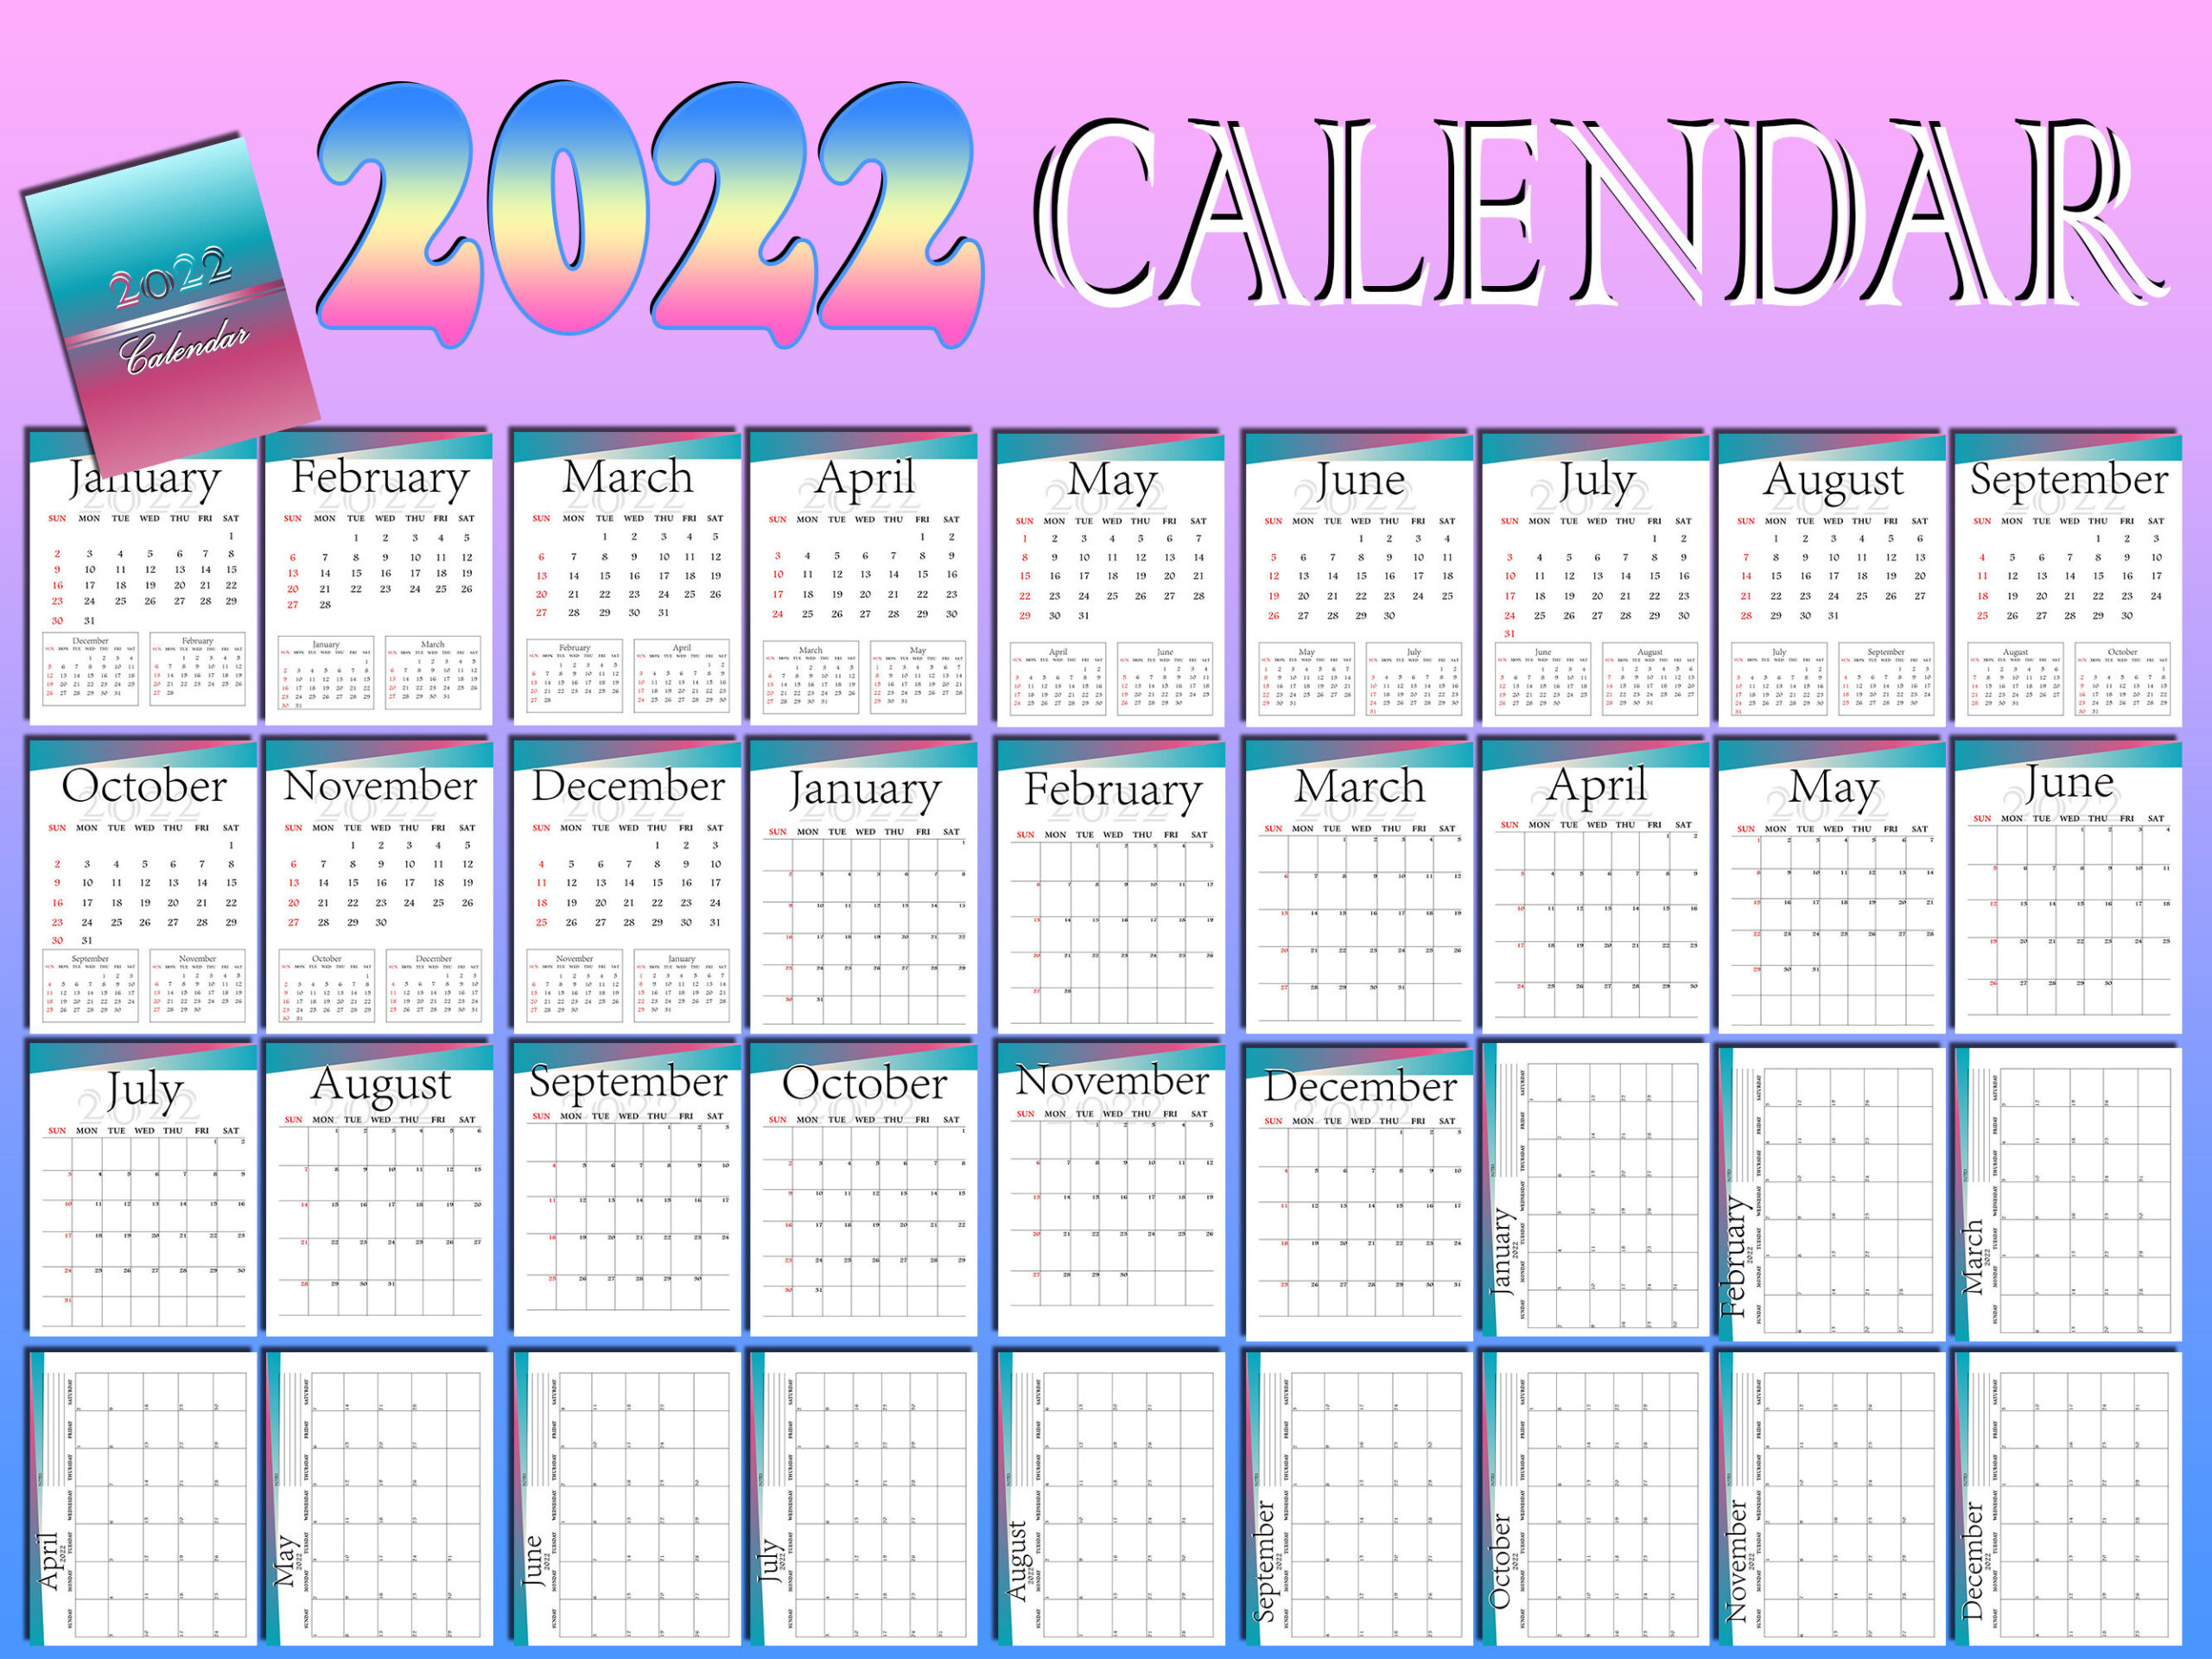 2022 Planner Annual Calendar Printable Digital Download Daily | Etsy-Download Calendar 2022 Pdf Online